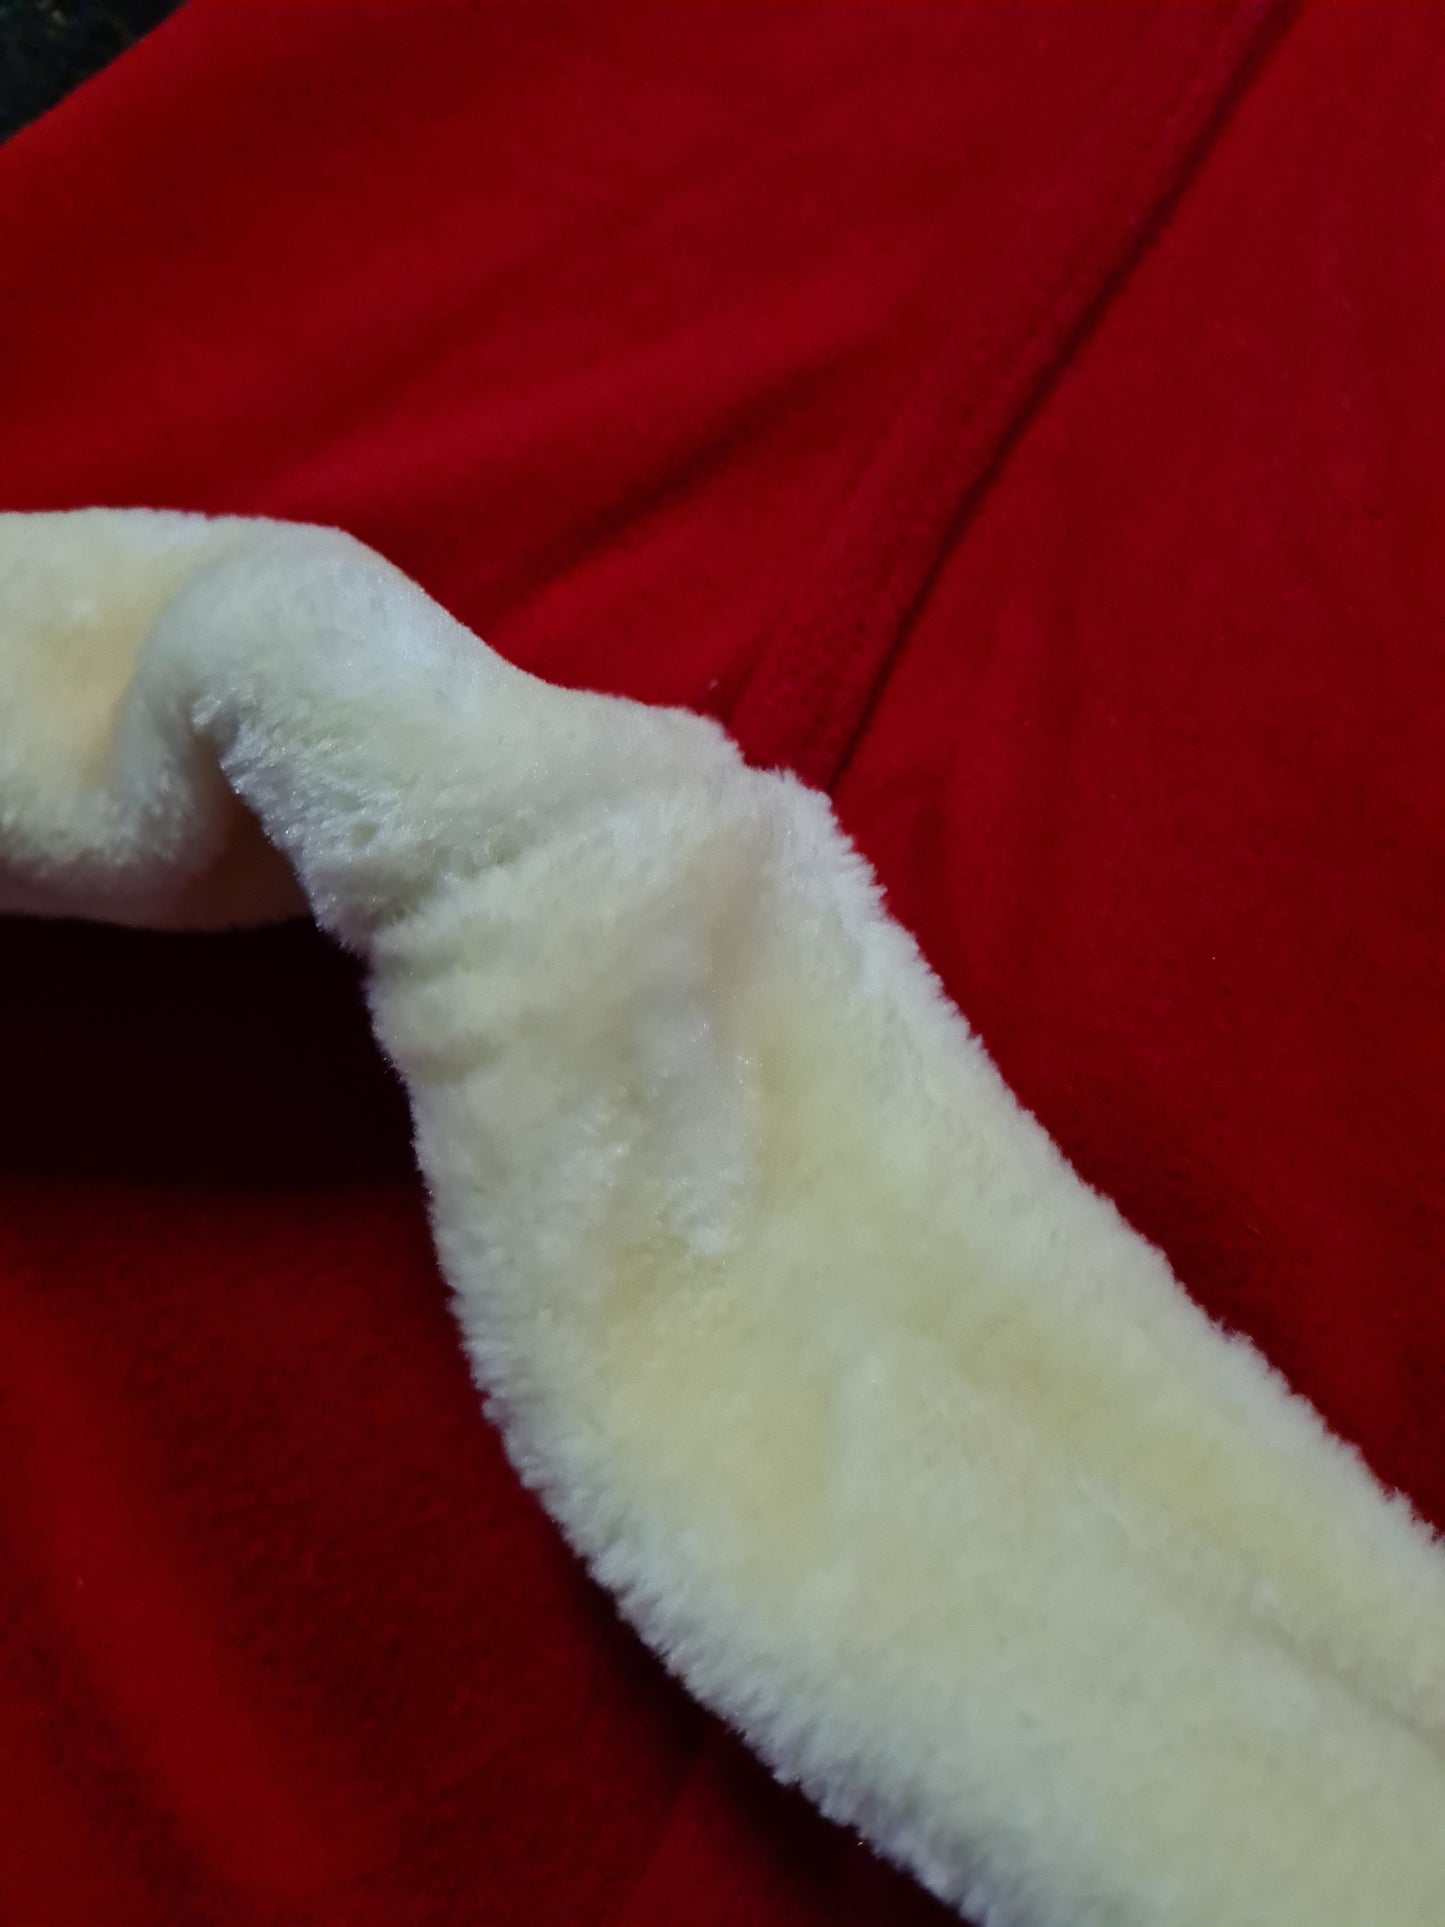 NEW rhinegold elite show/travel fleece red sizes 5'6 to 7'3 FREE POSTAGE 🟢